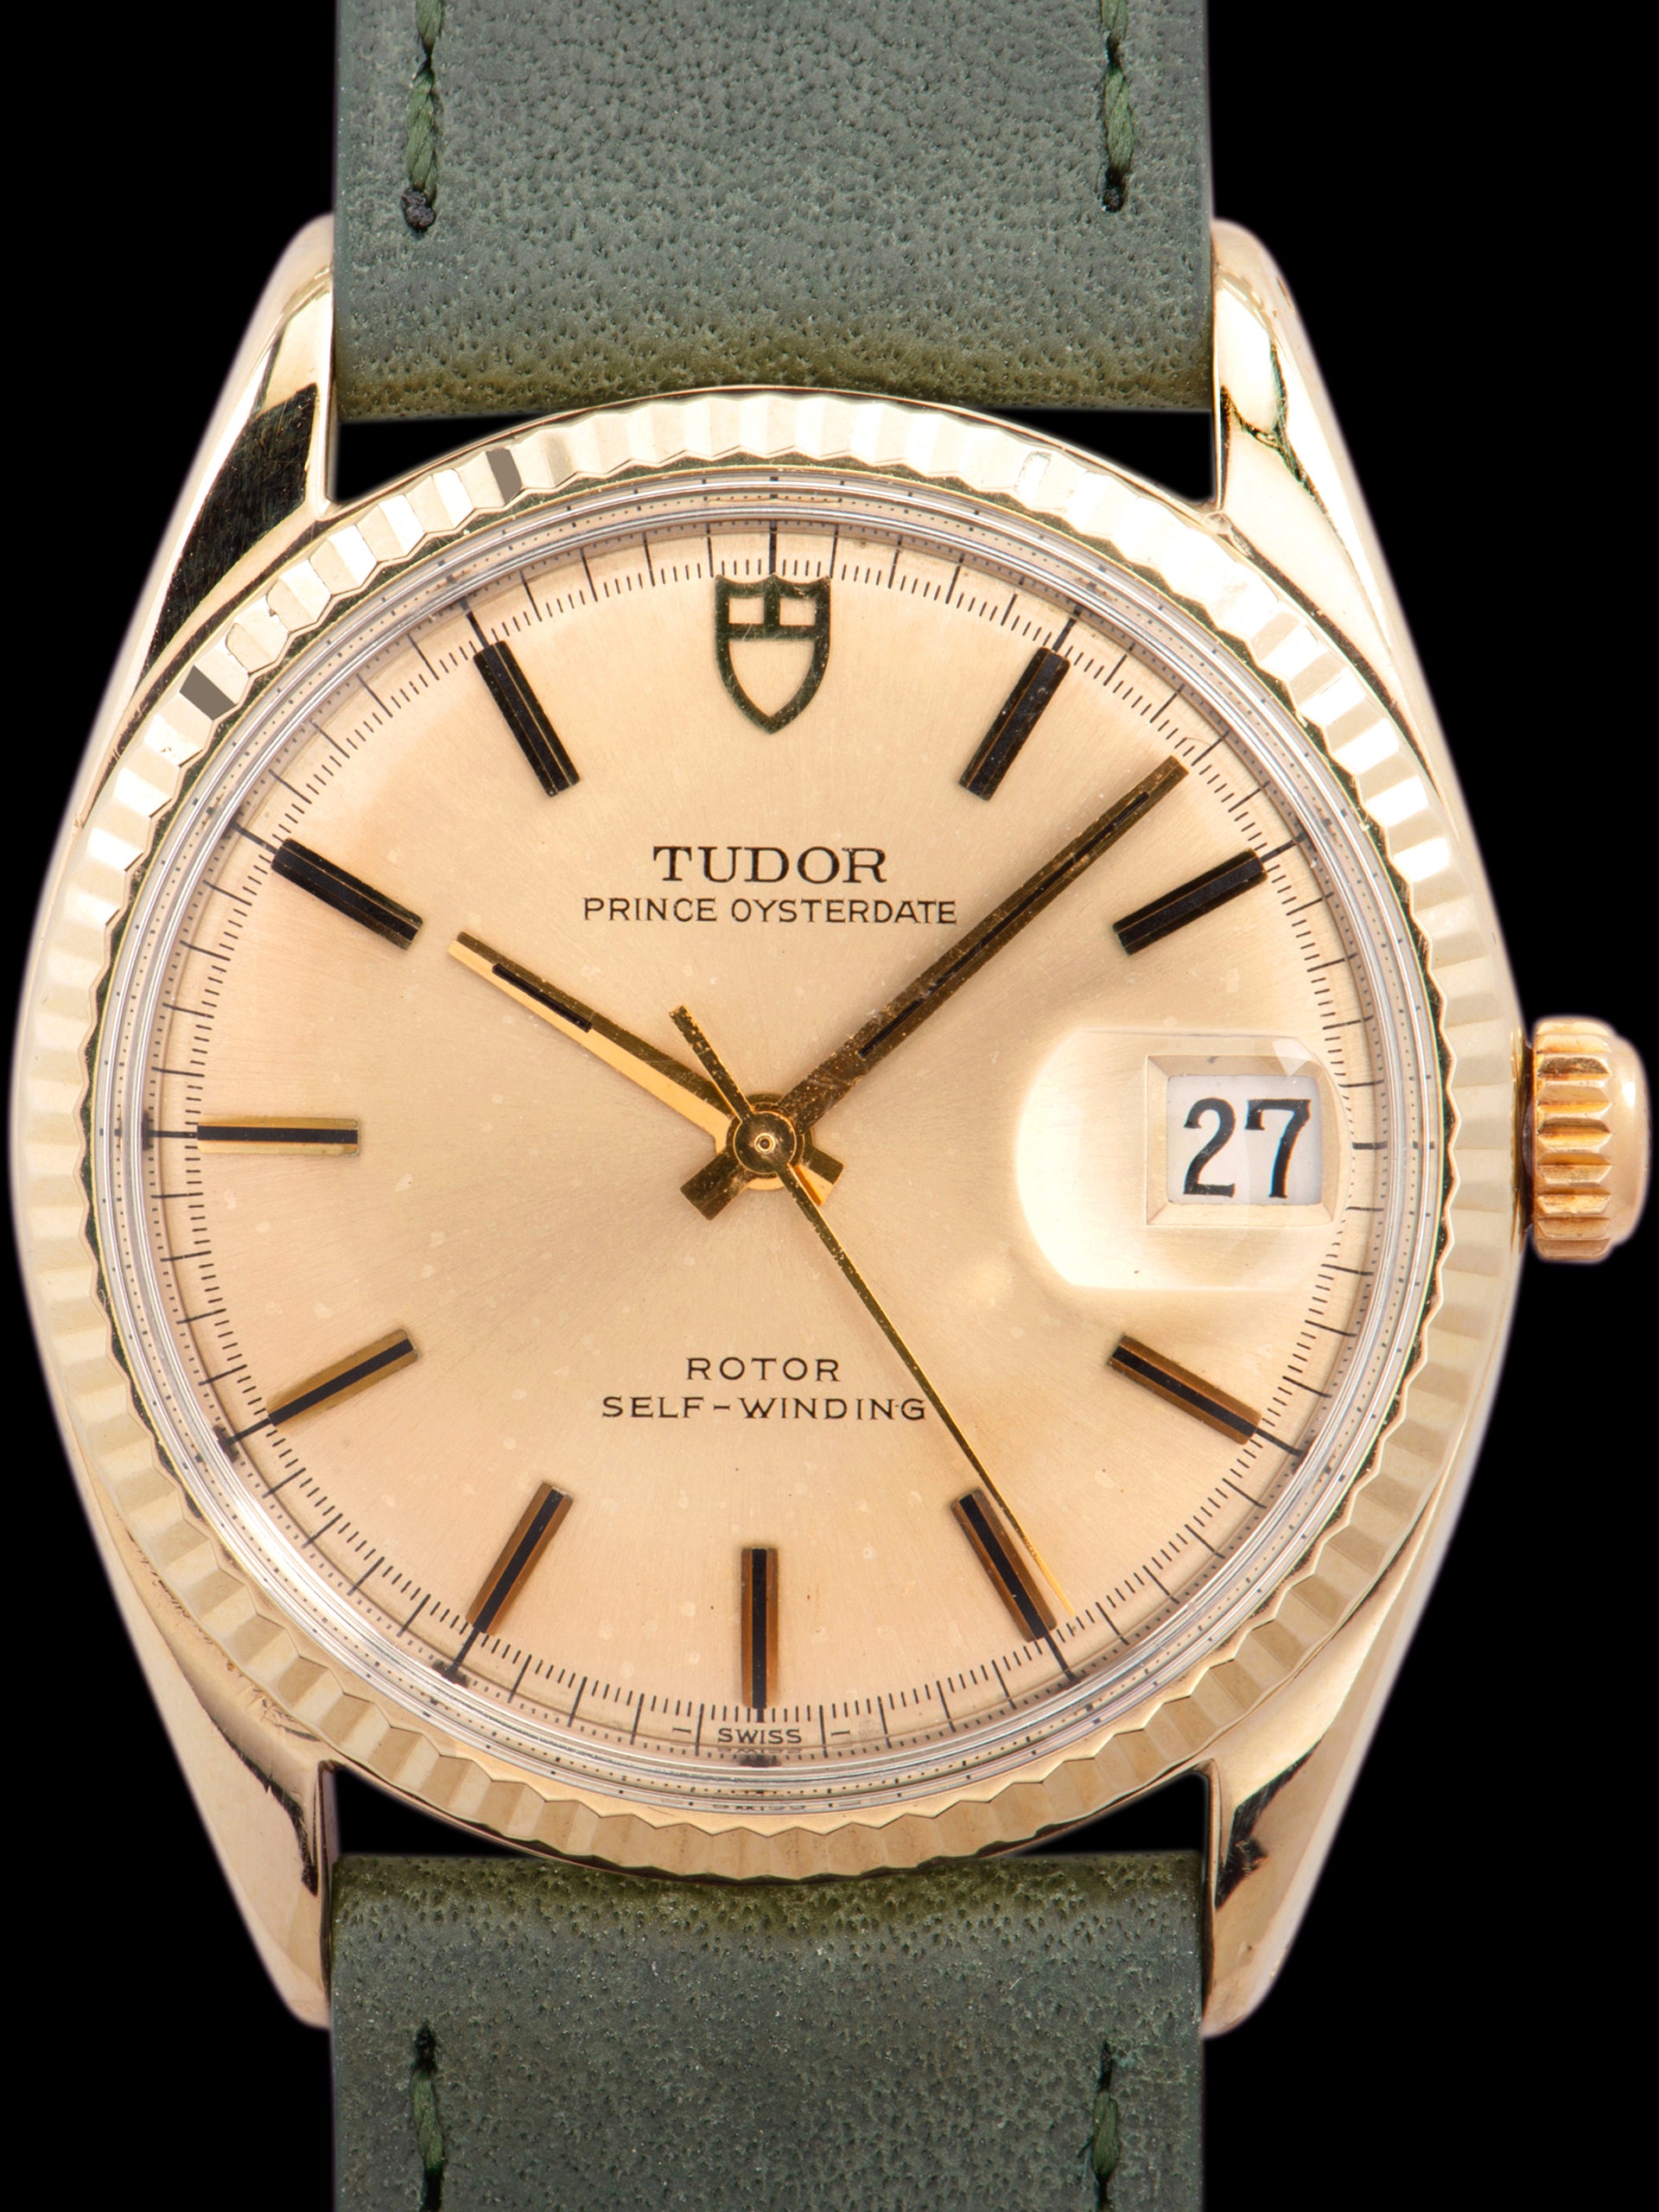 1969 Tudor Prince Oysterdate (Ref. 7990/5) "Gold Cap"